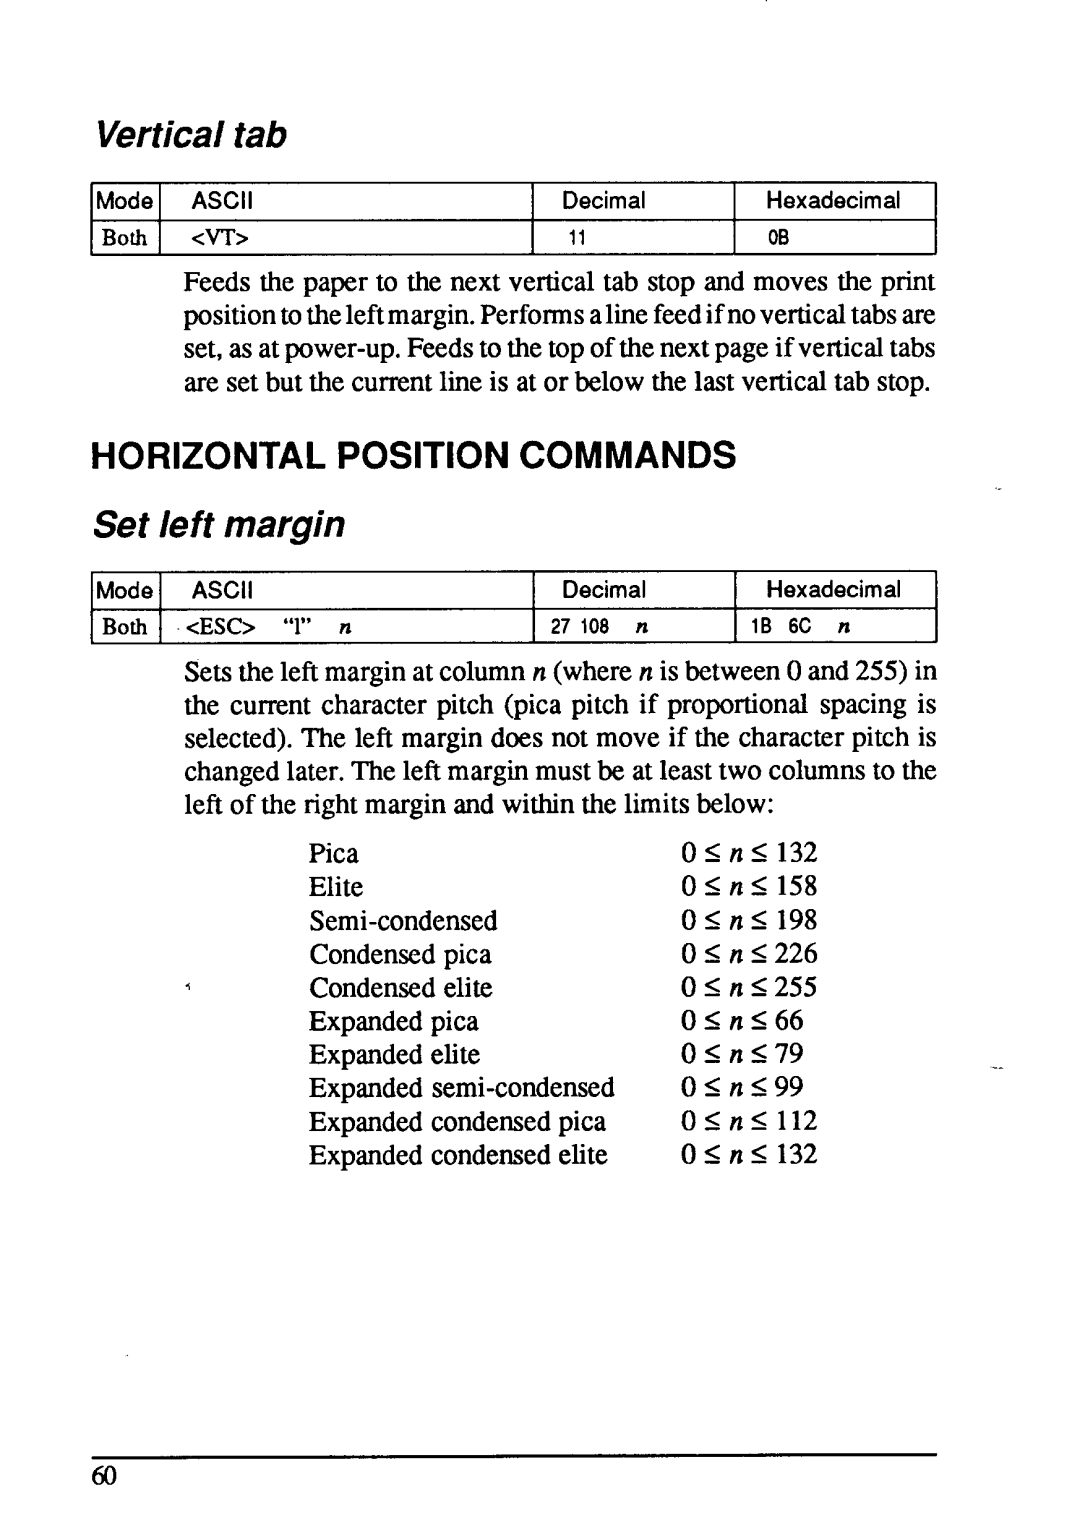 Star Micronics LC24-15 user manual Vertical tab, Horizontal Position Commands, Set left margin 